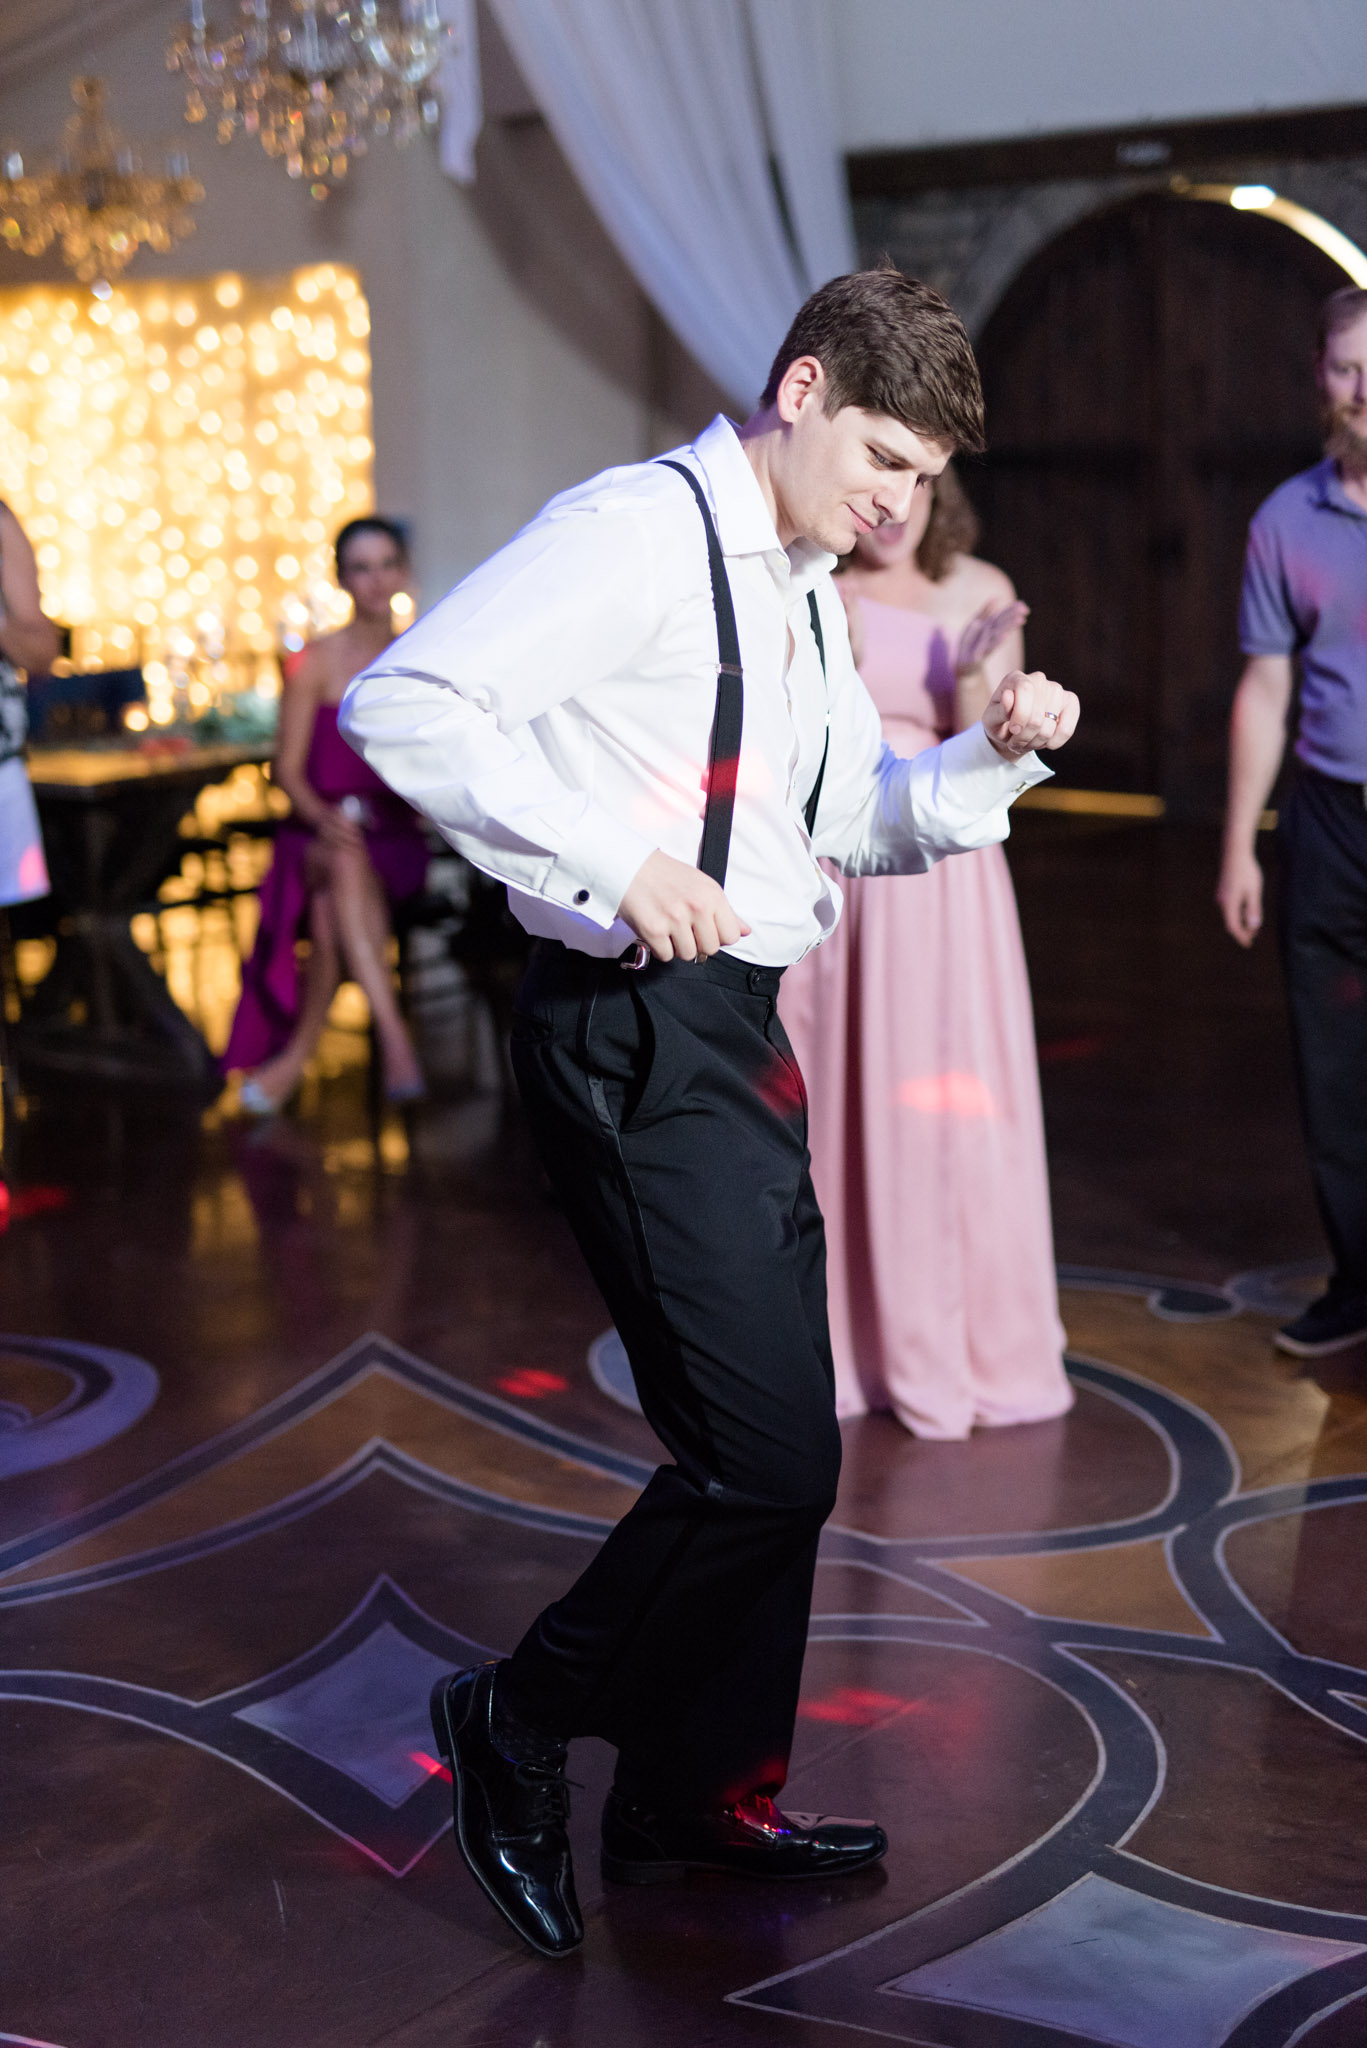 Groom dances during reception.